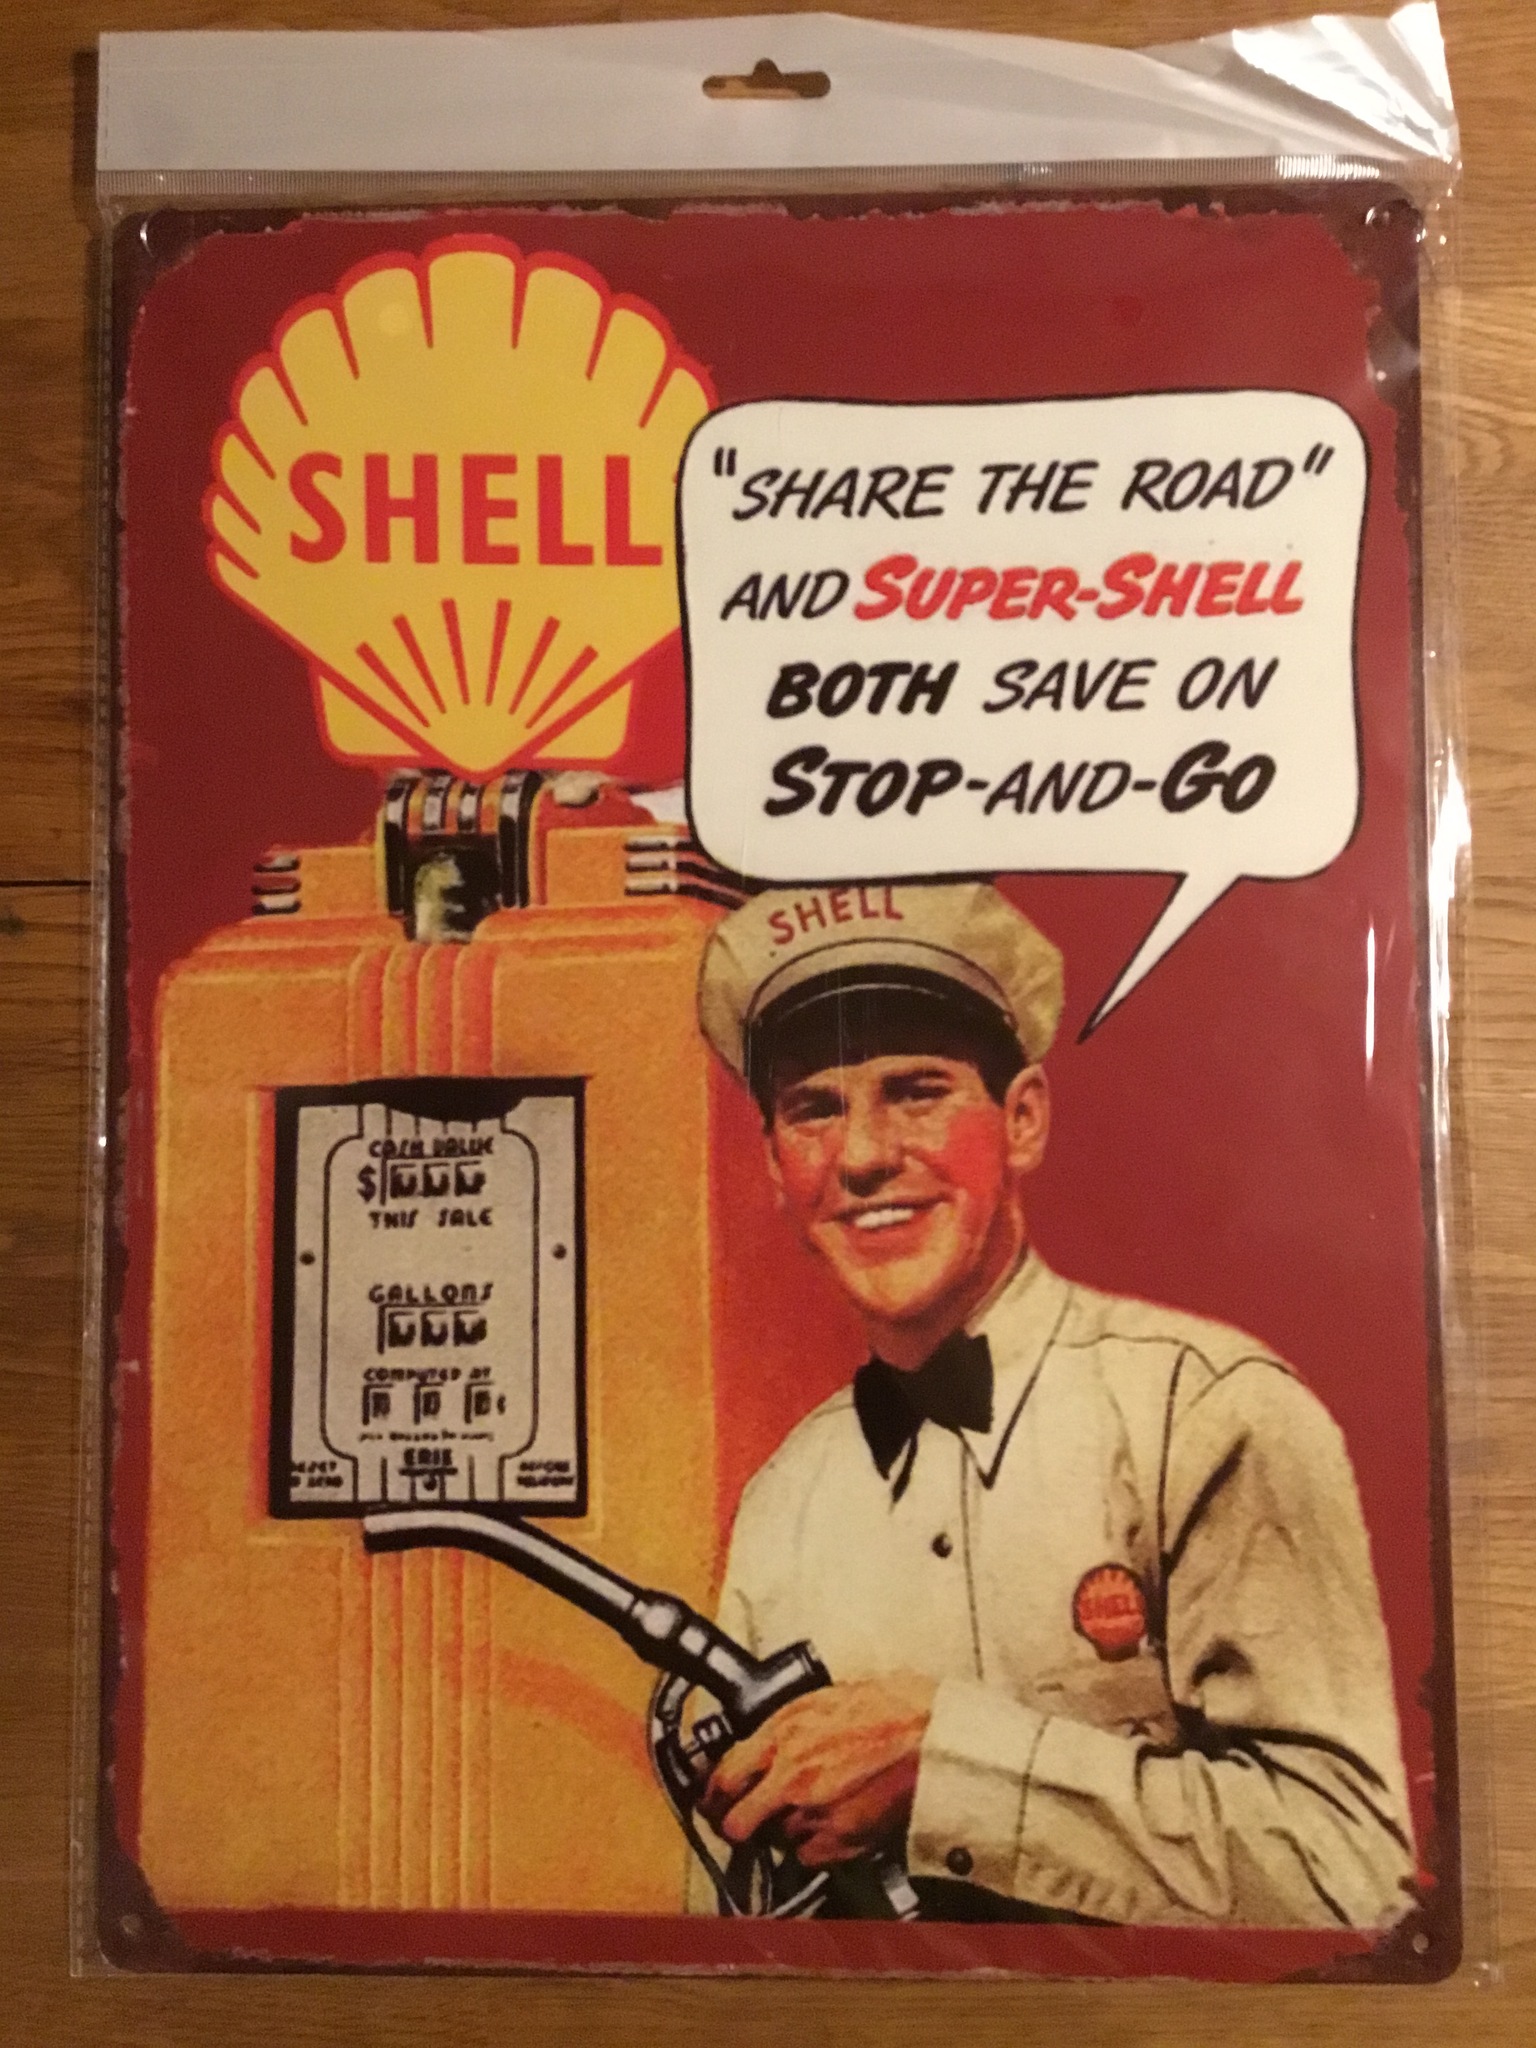 Shell skylt